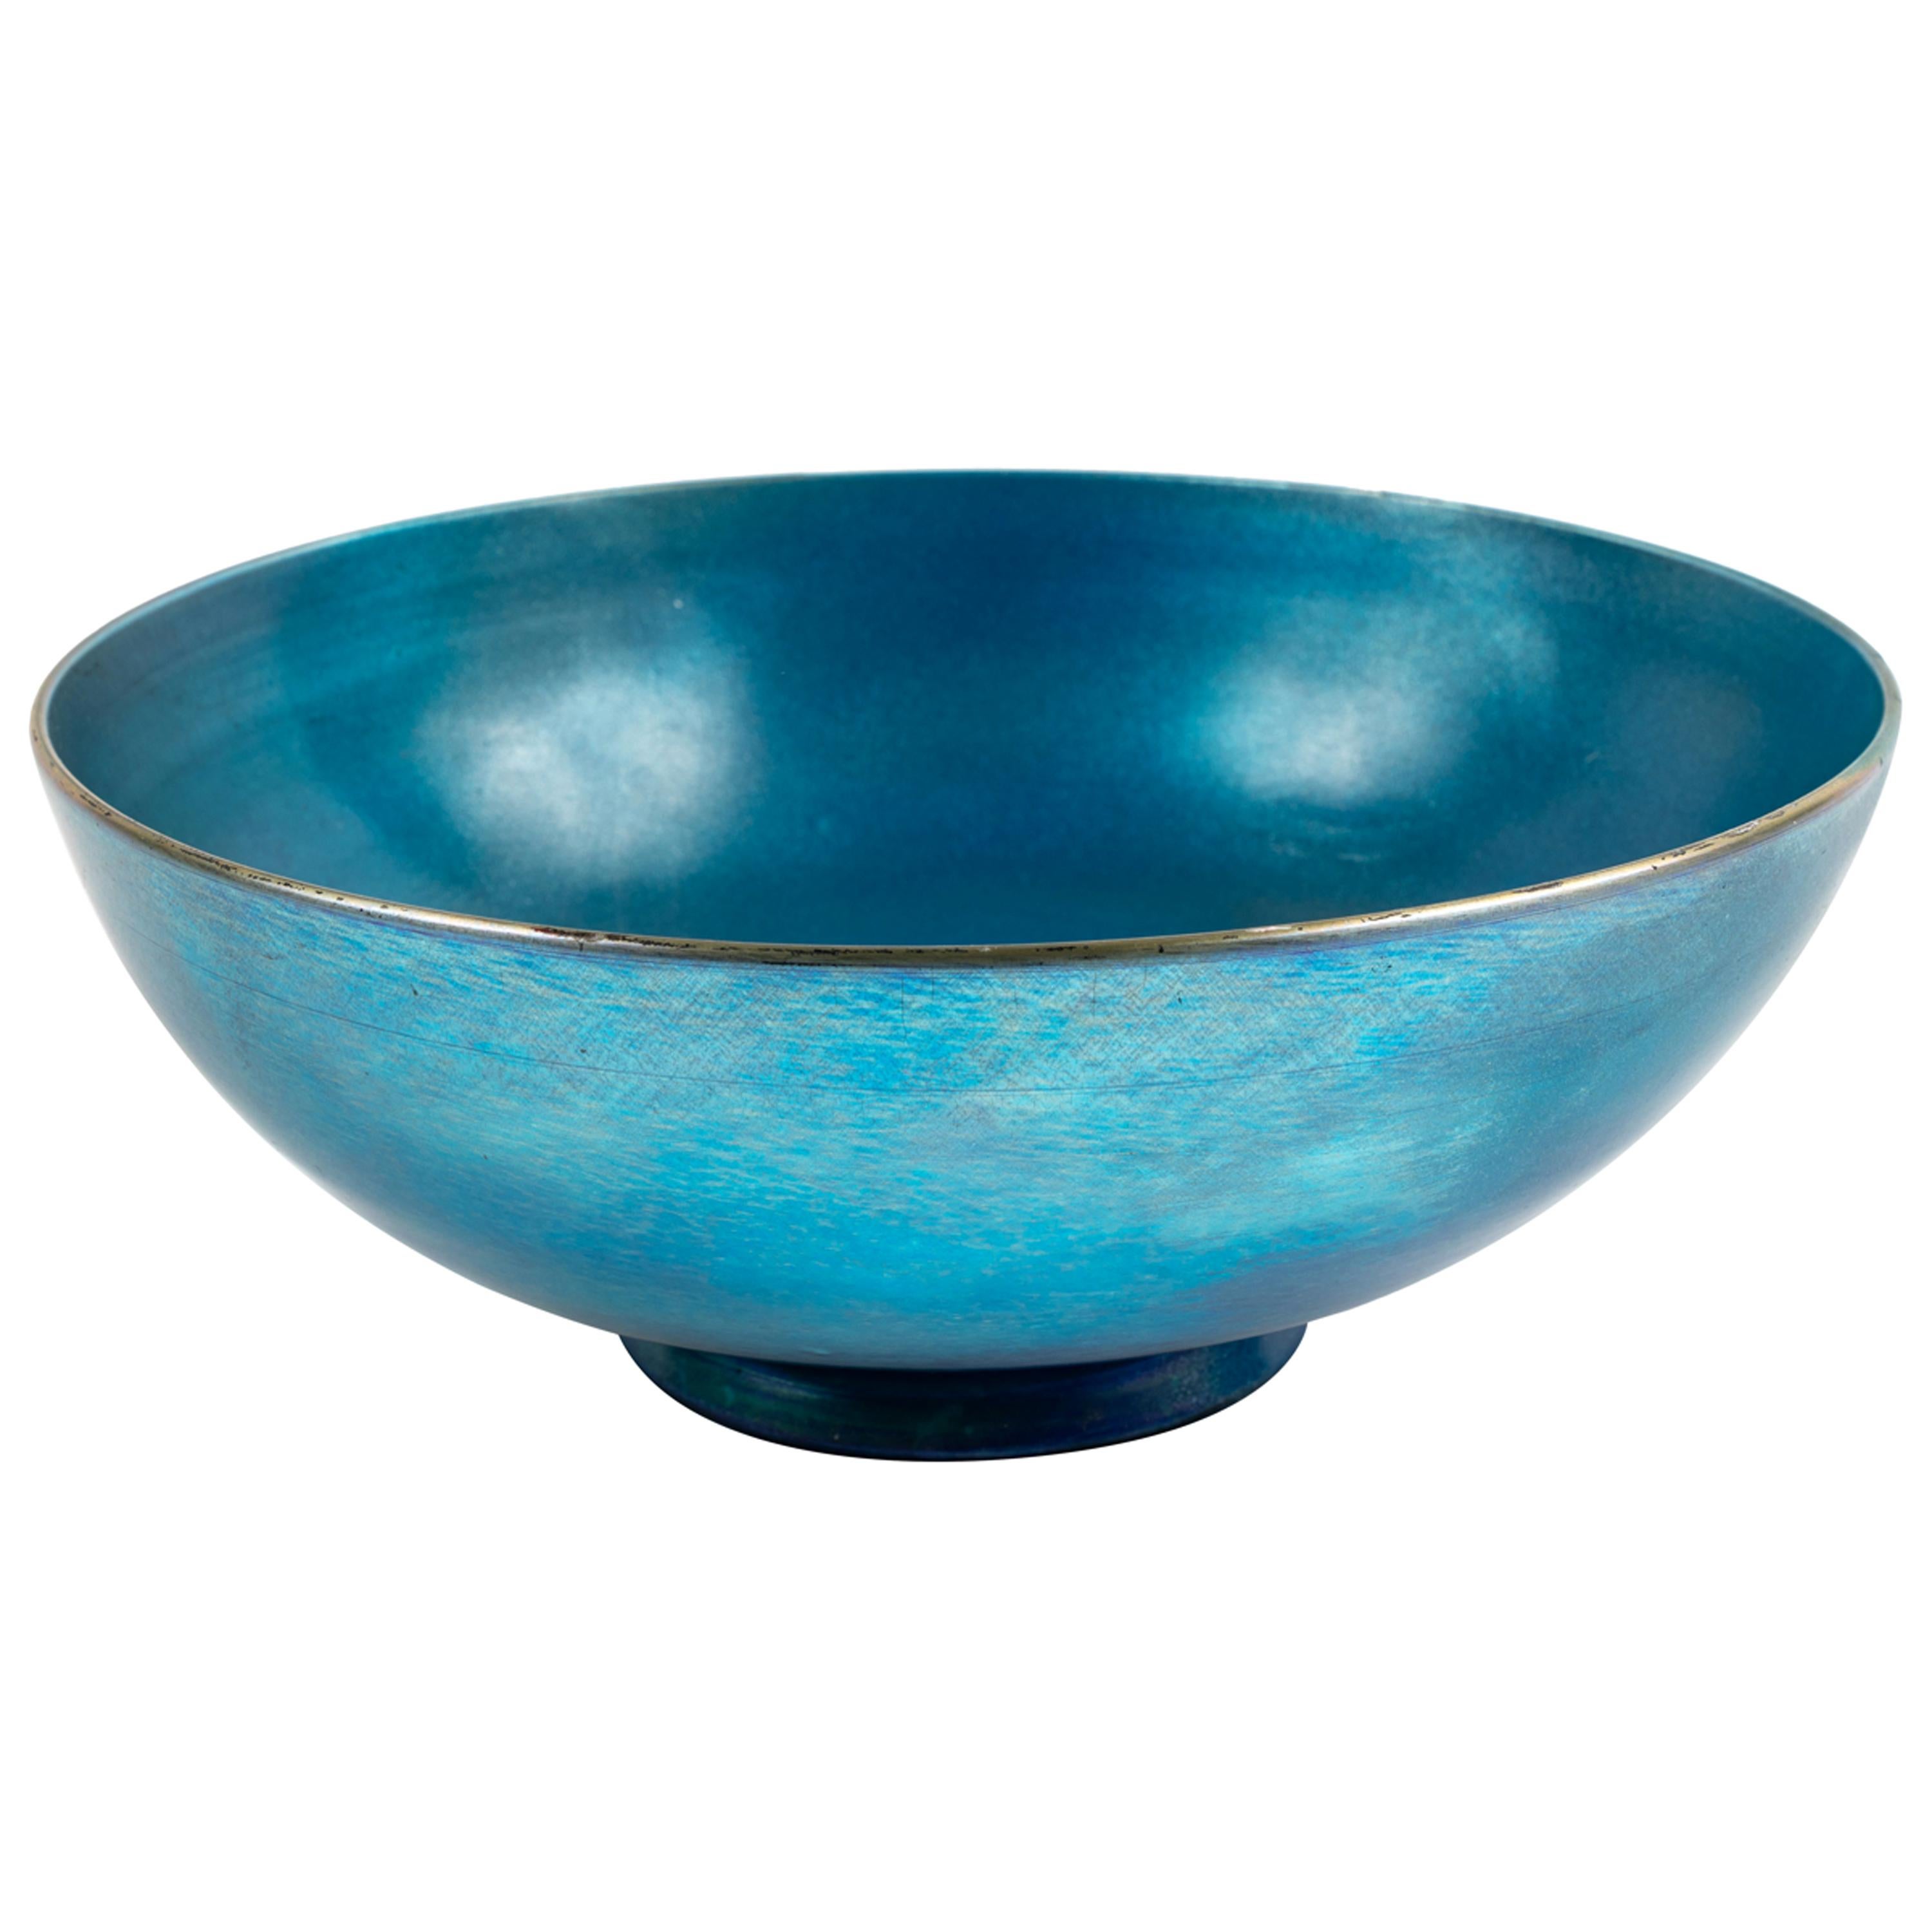 Footed Blue Steuben Aurene Bowl by Frederick Carder